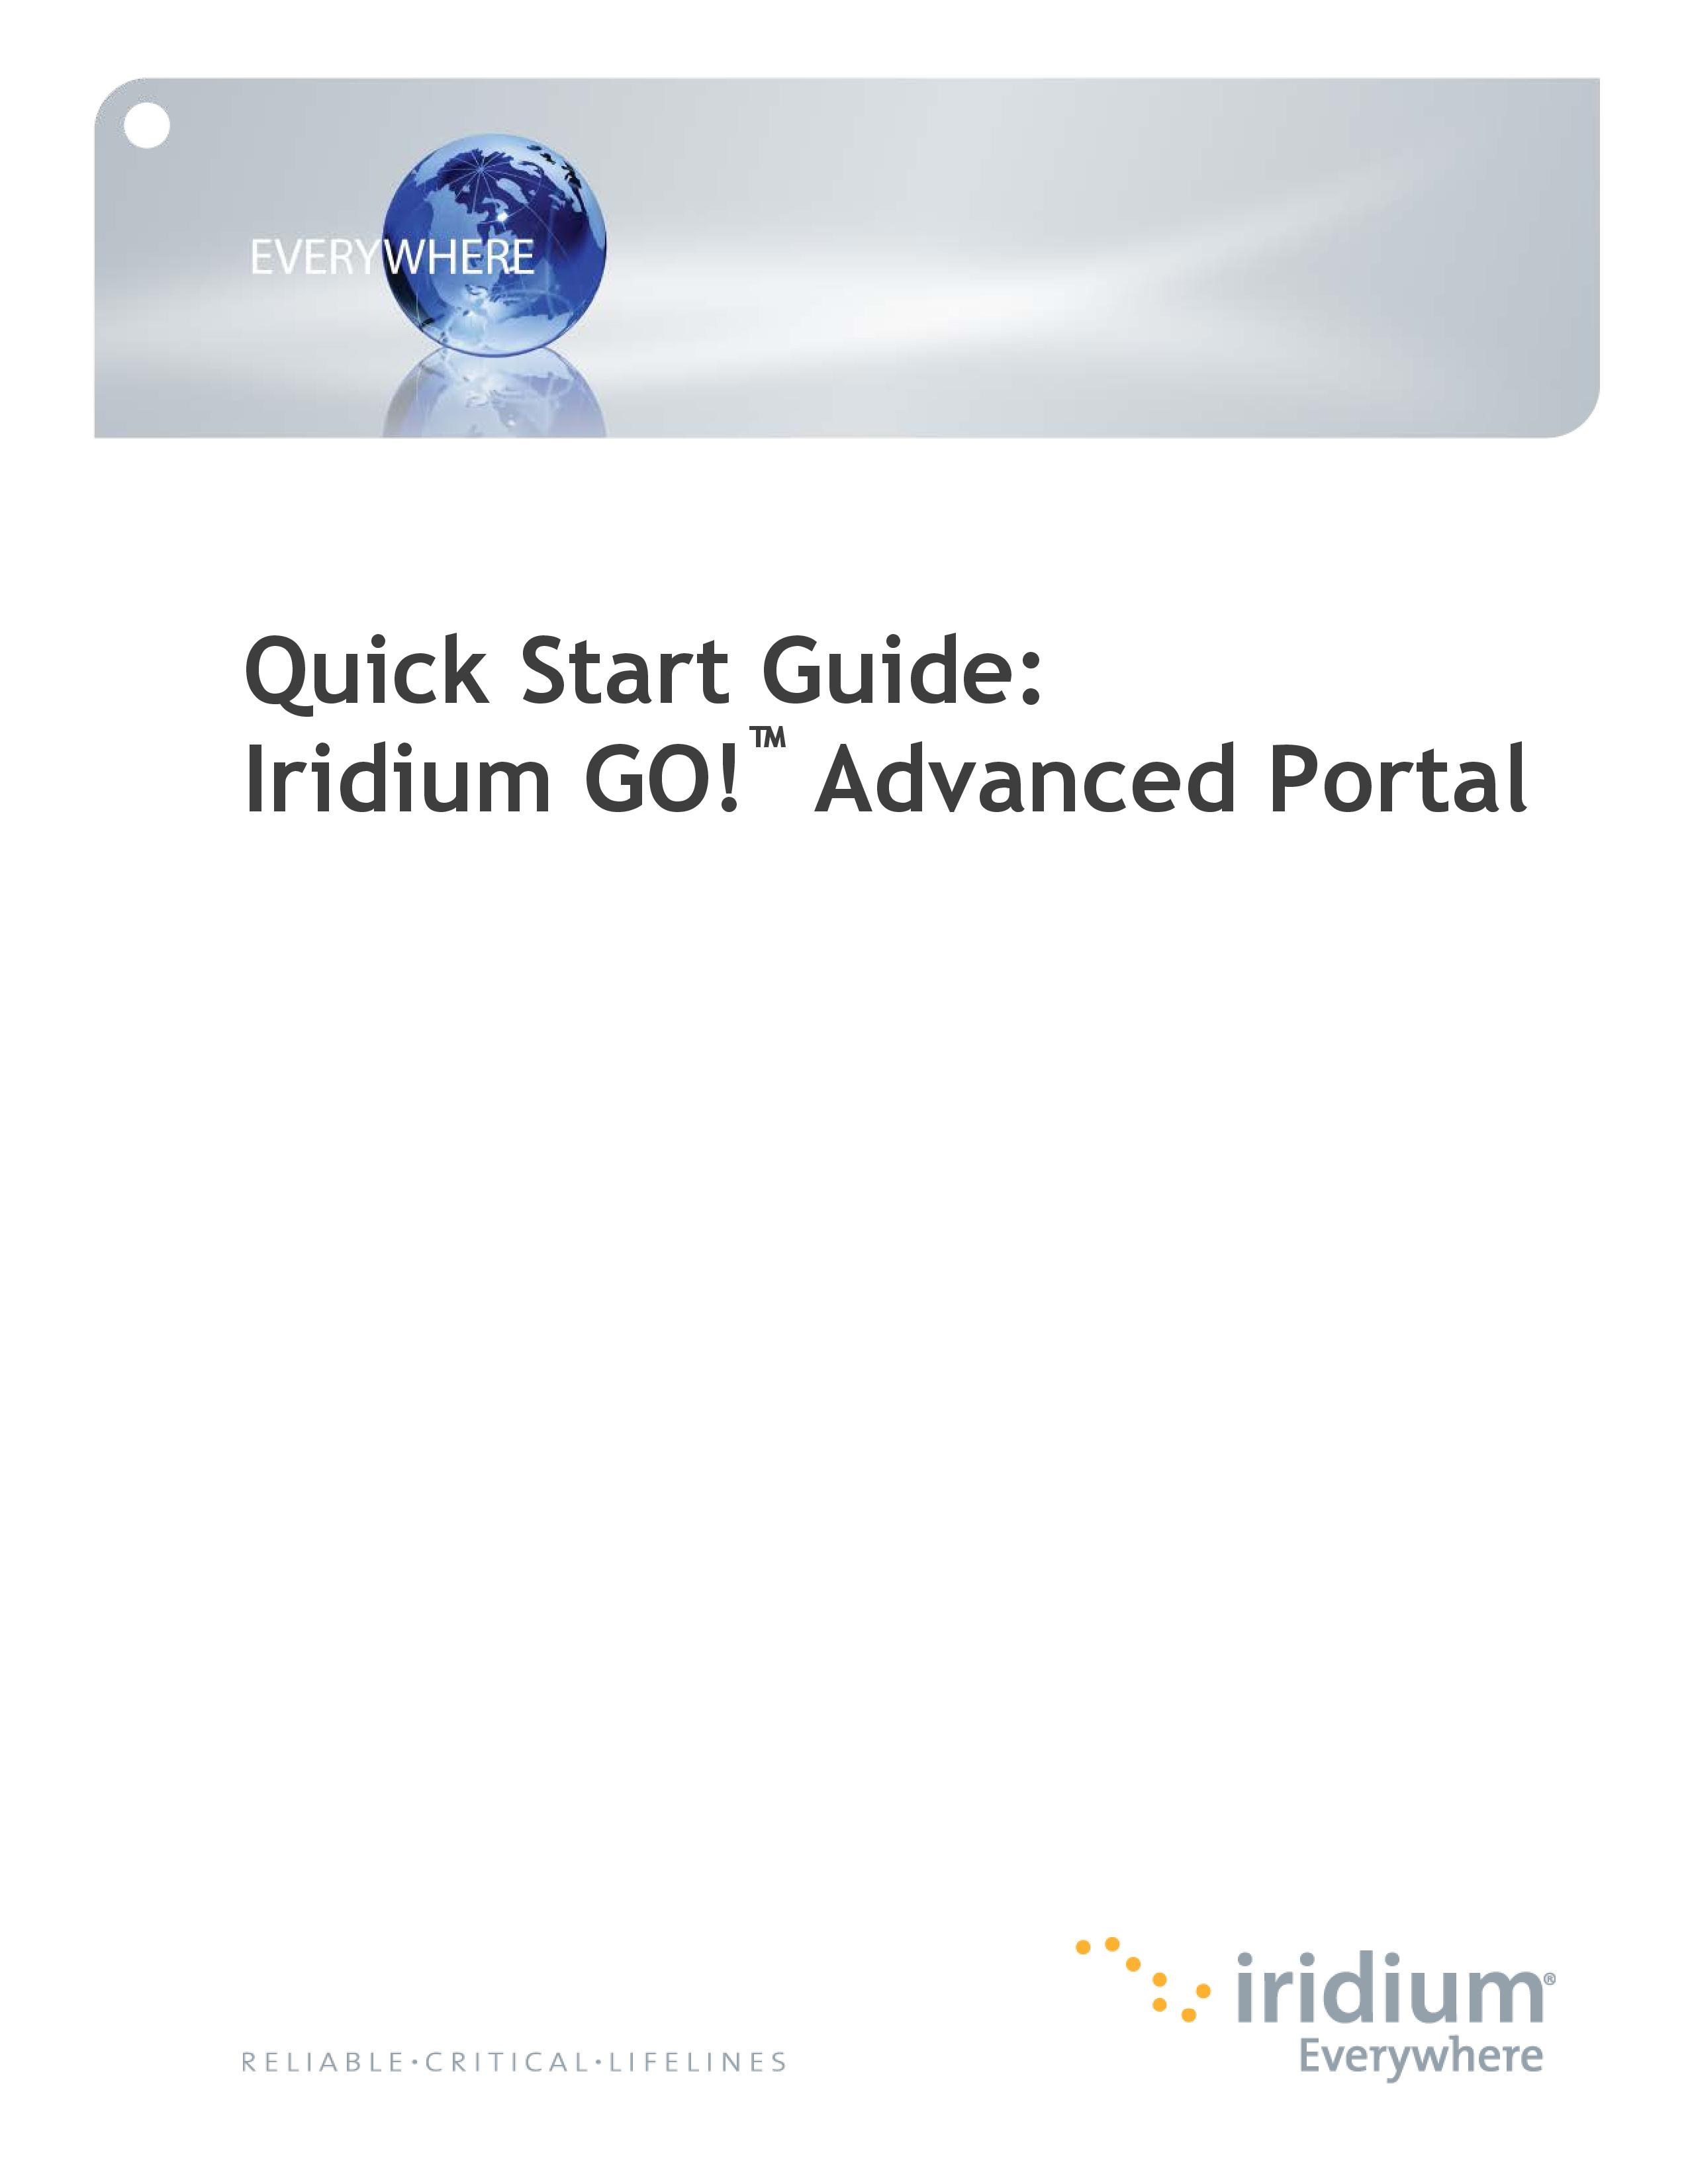 QSG_Iridium_GO__Advanced_Portal_Guide_2014_1_-page-001.jpg